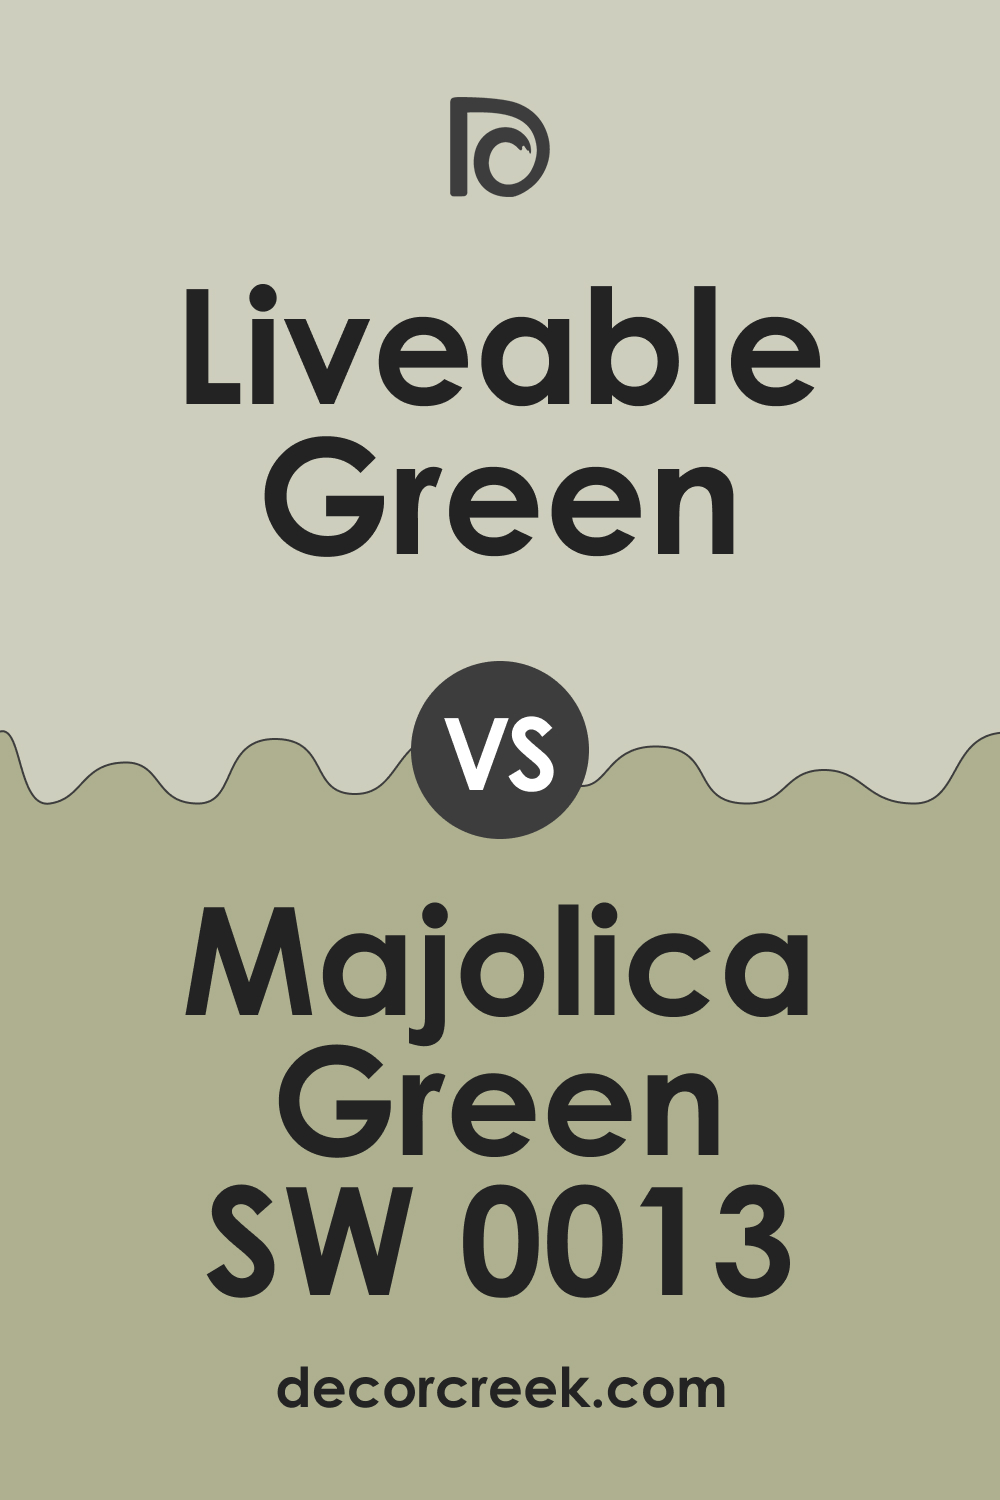 Liveable Green vs Majolica Green